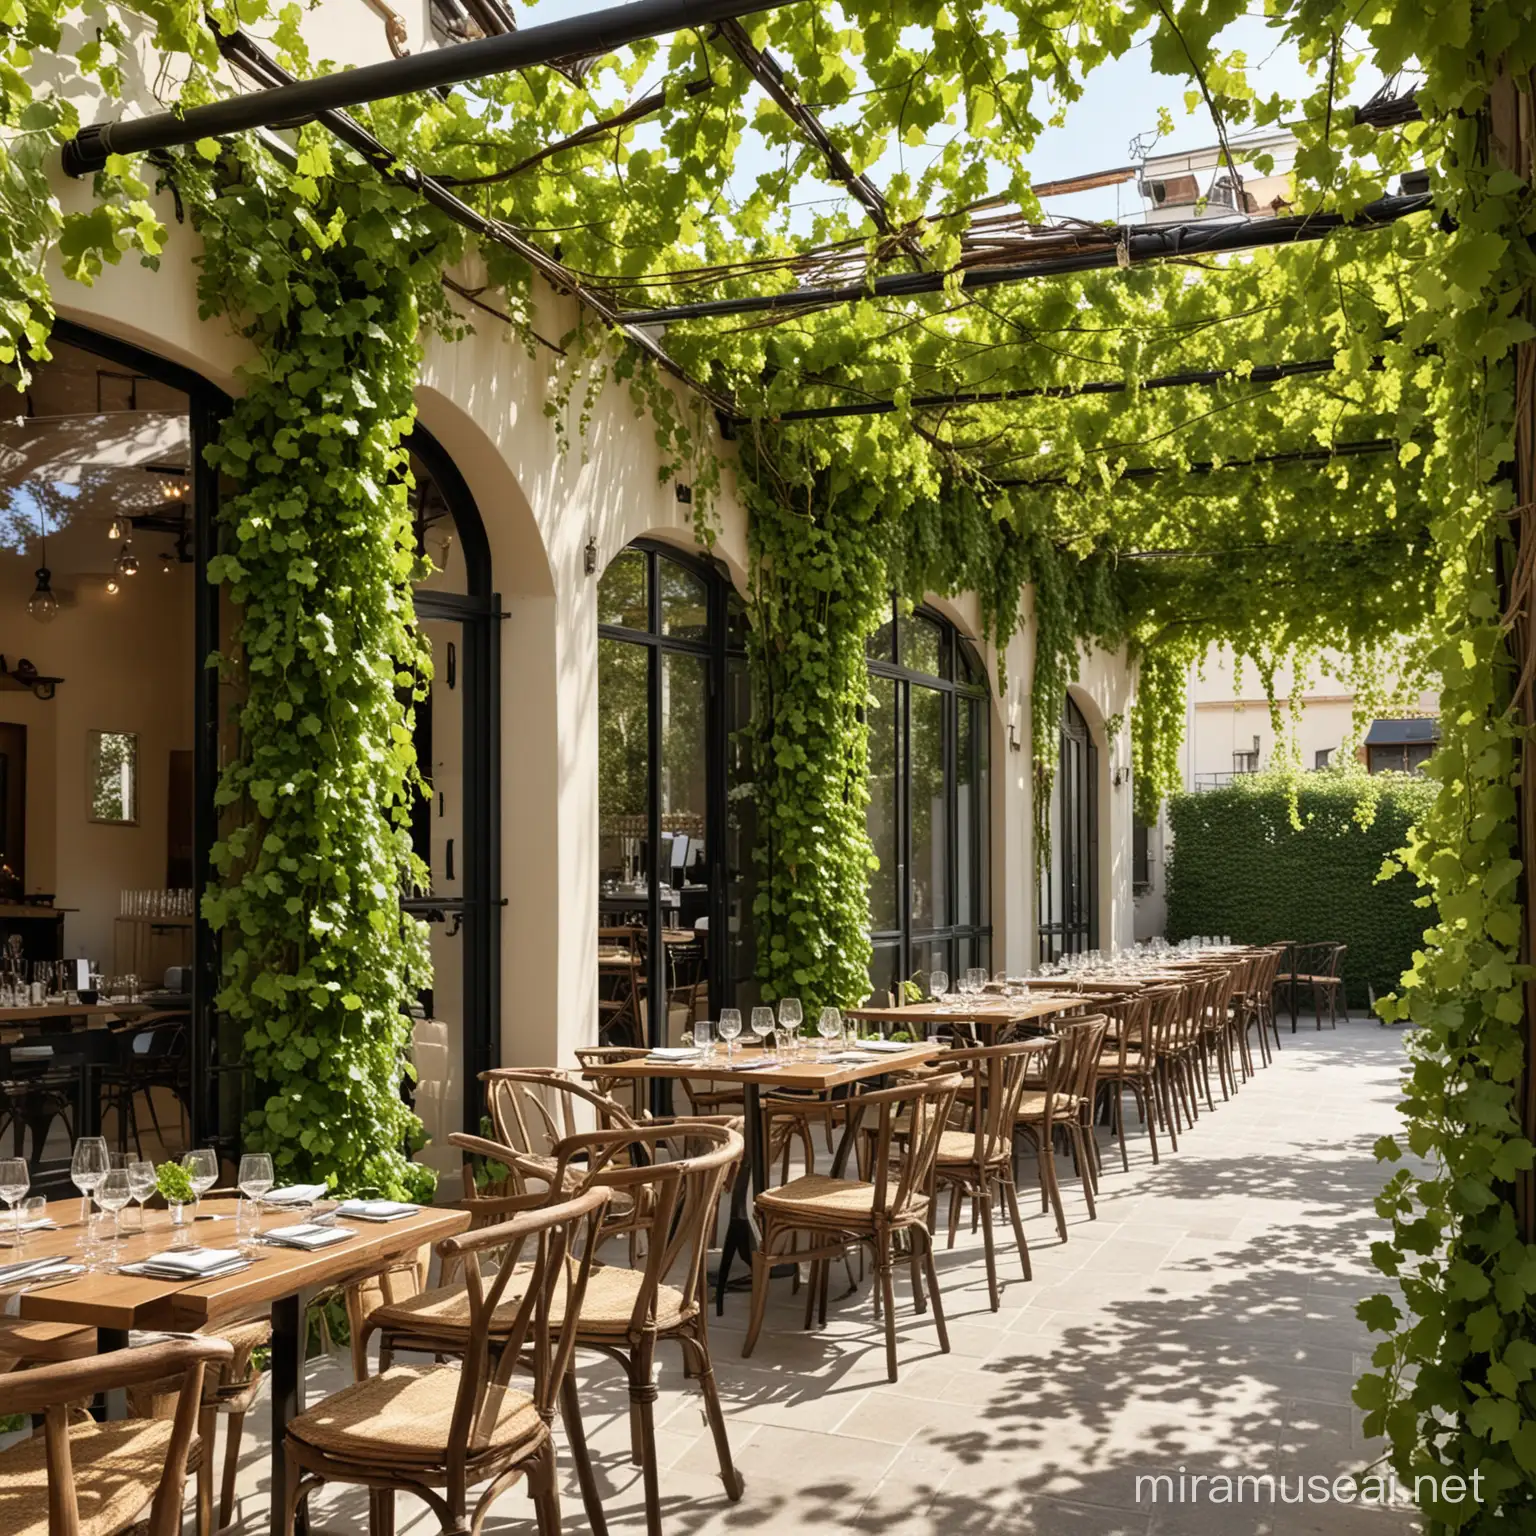 Elegant Wine Restaurant Terrace Amidst Lush Grape Vines